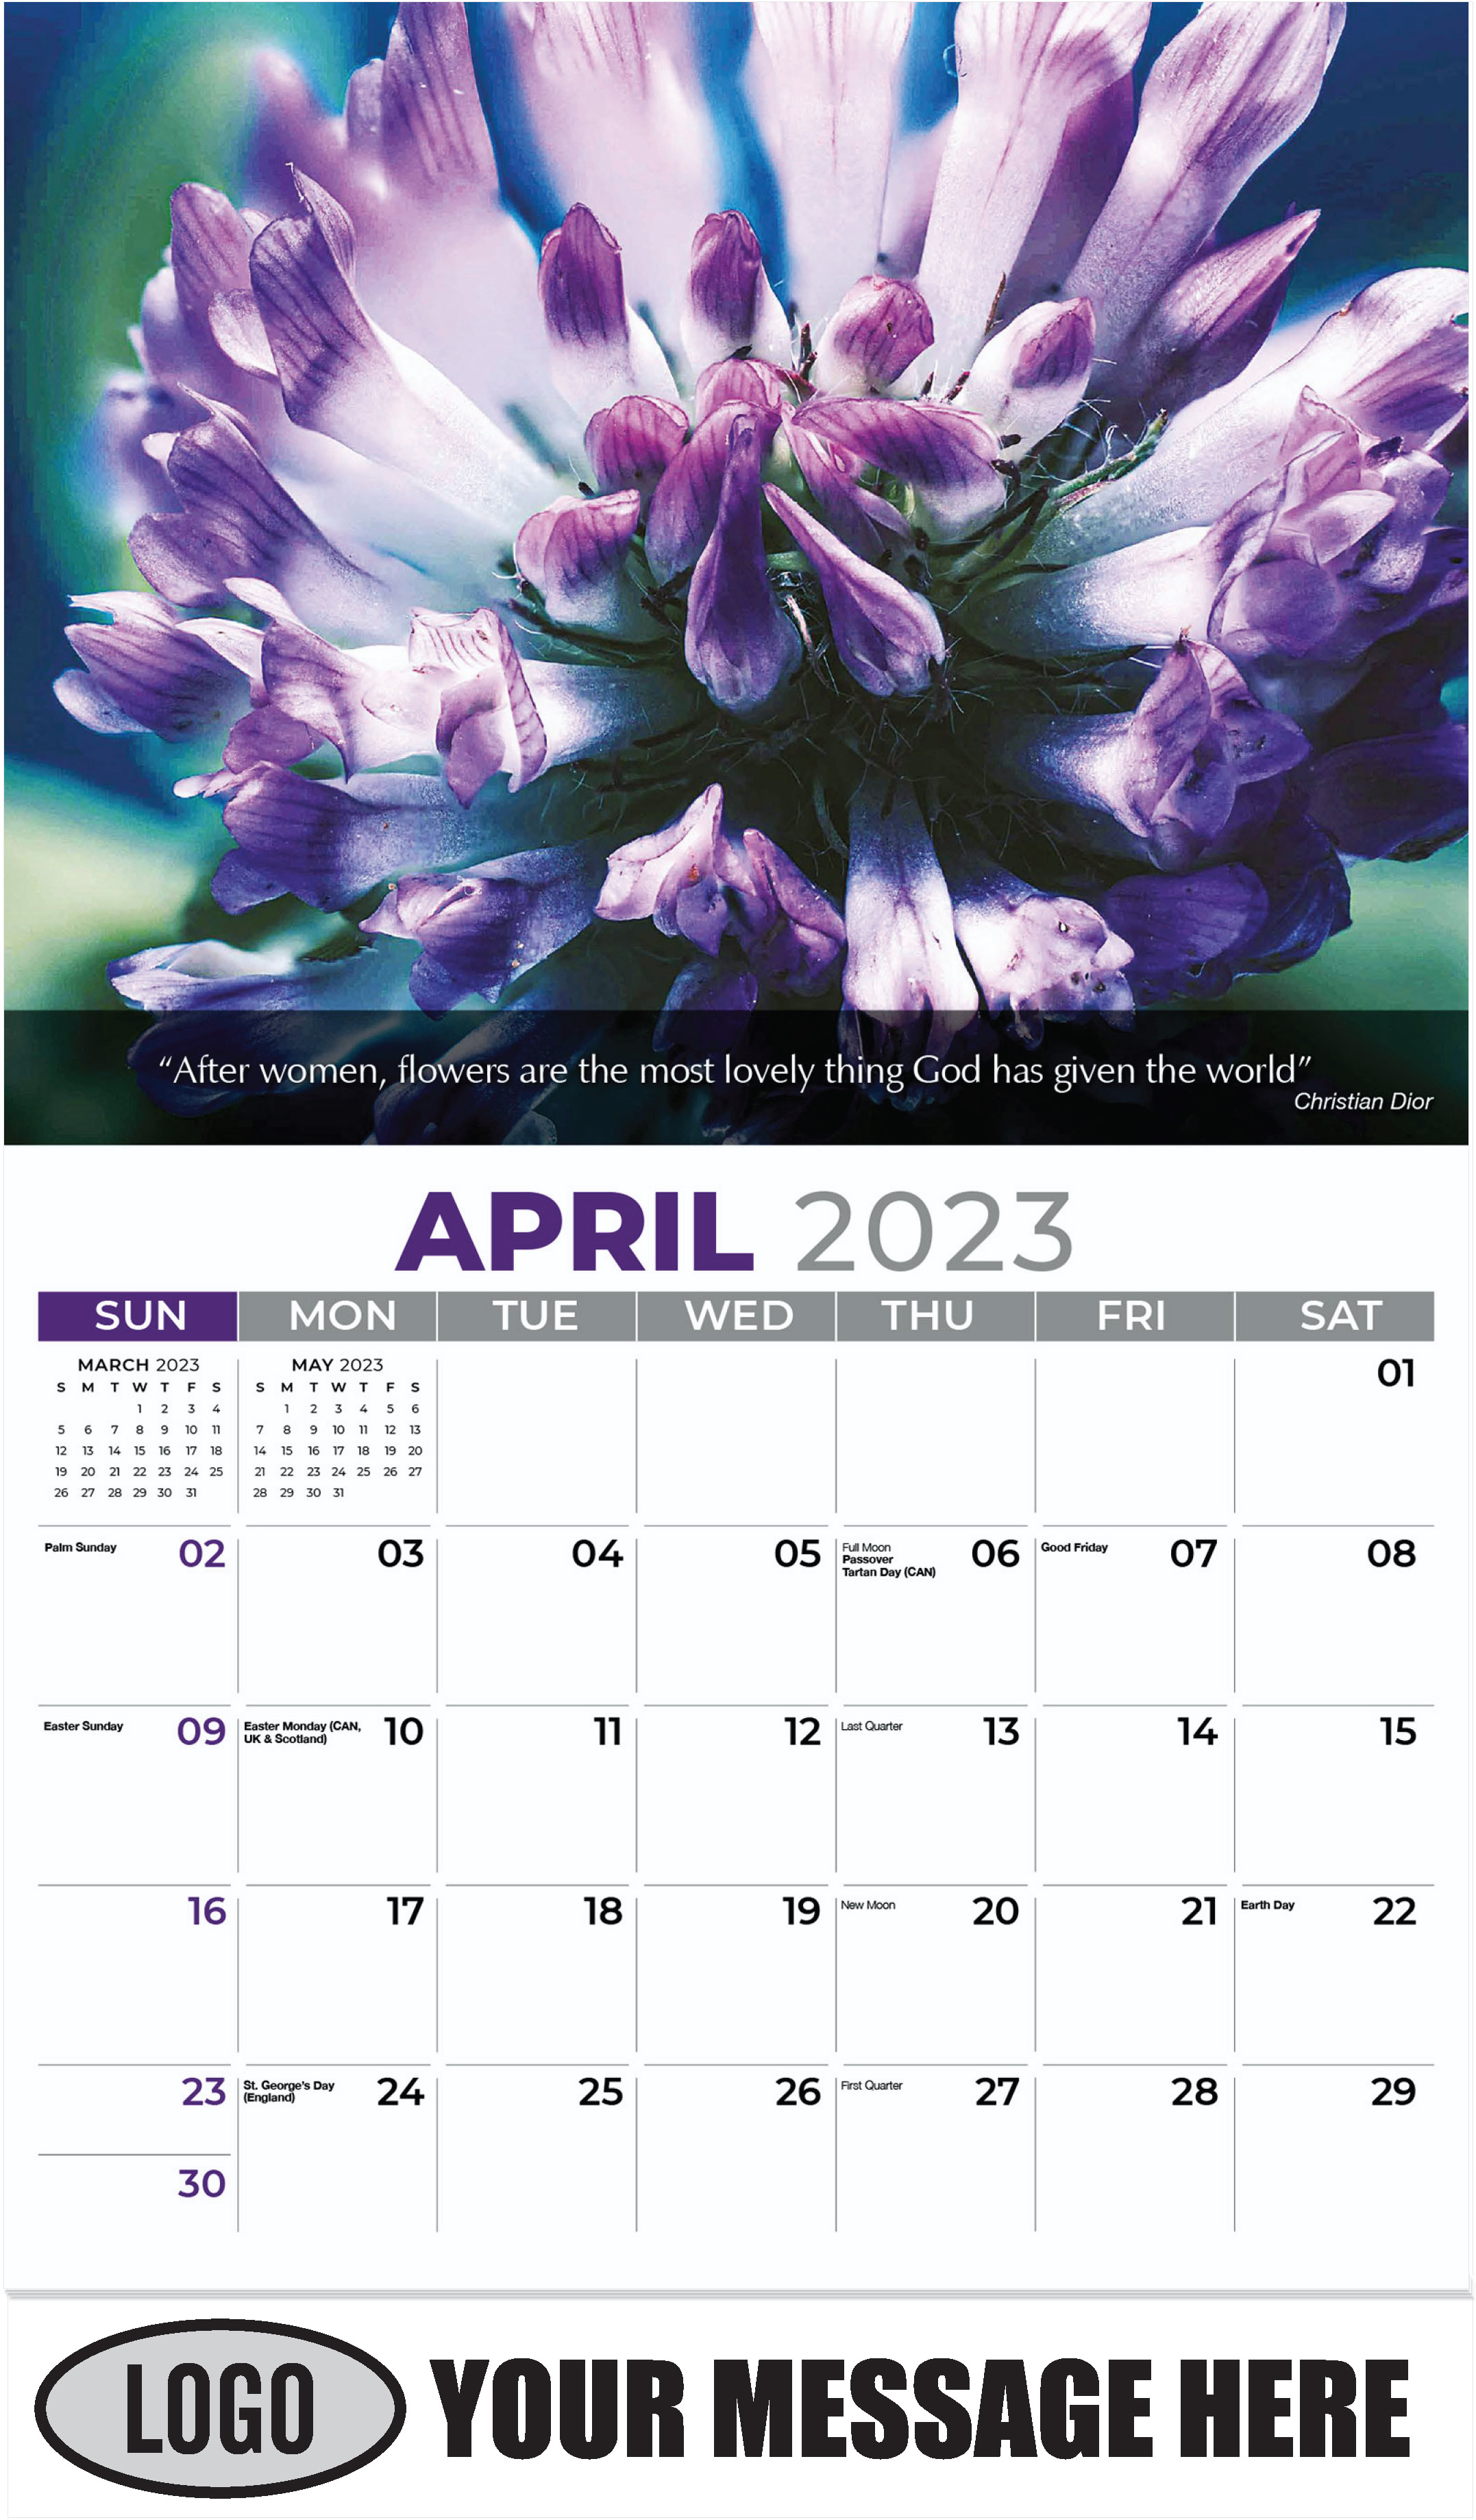 Purple Flower - April - Flowers & Gardens 2023 Promotional Calendar